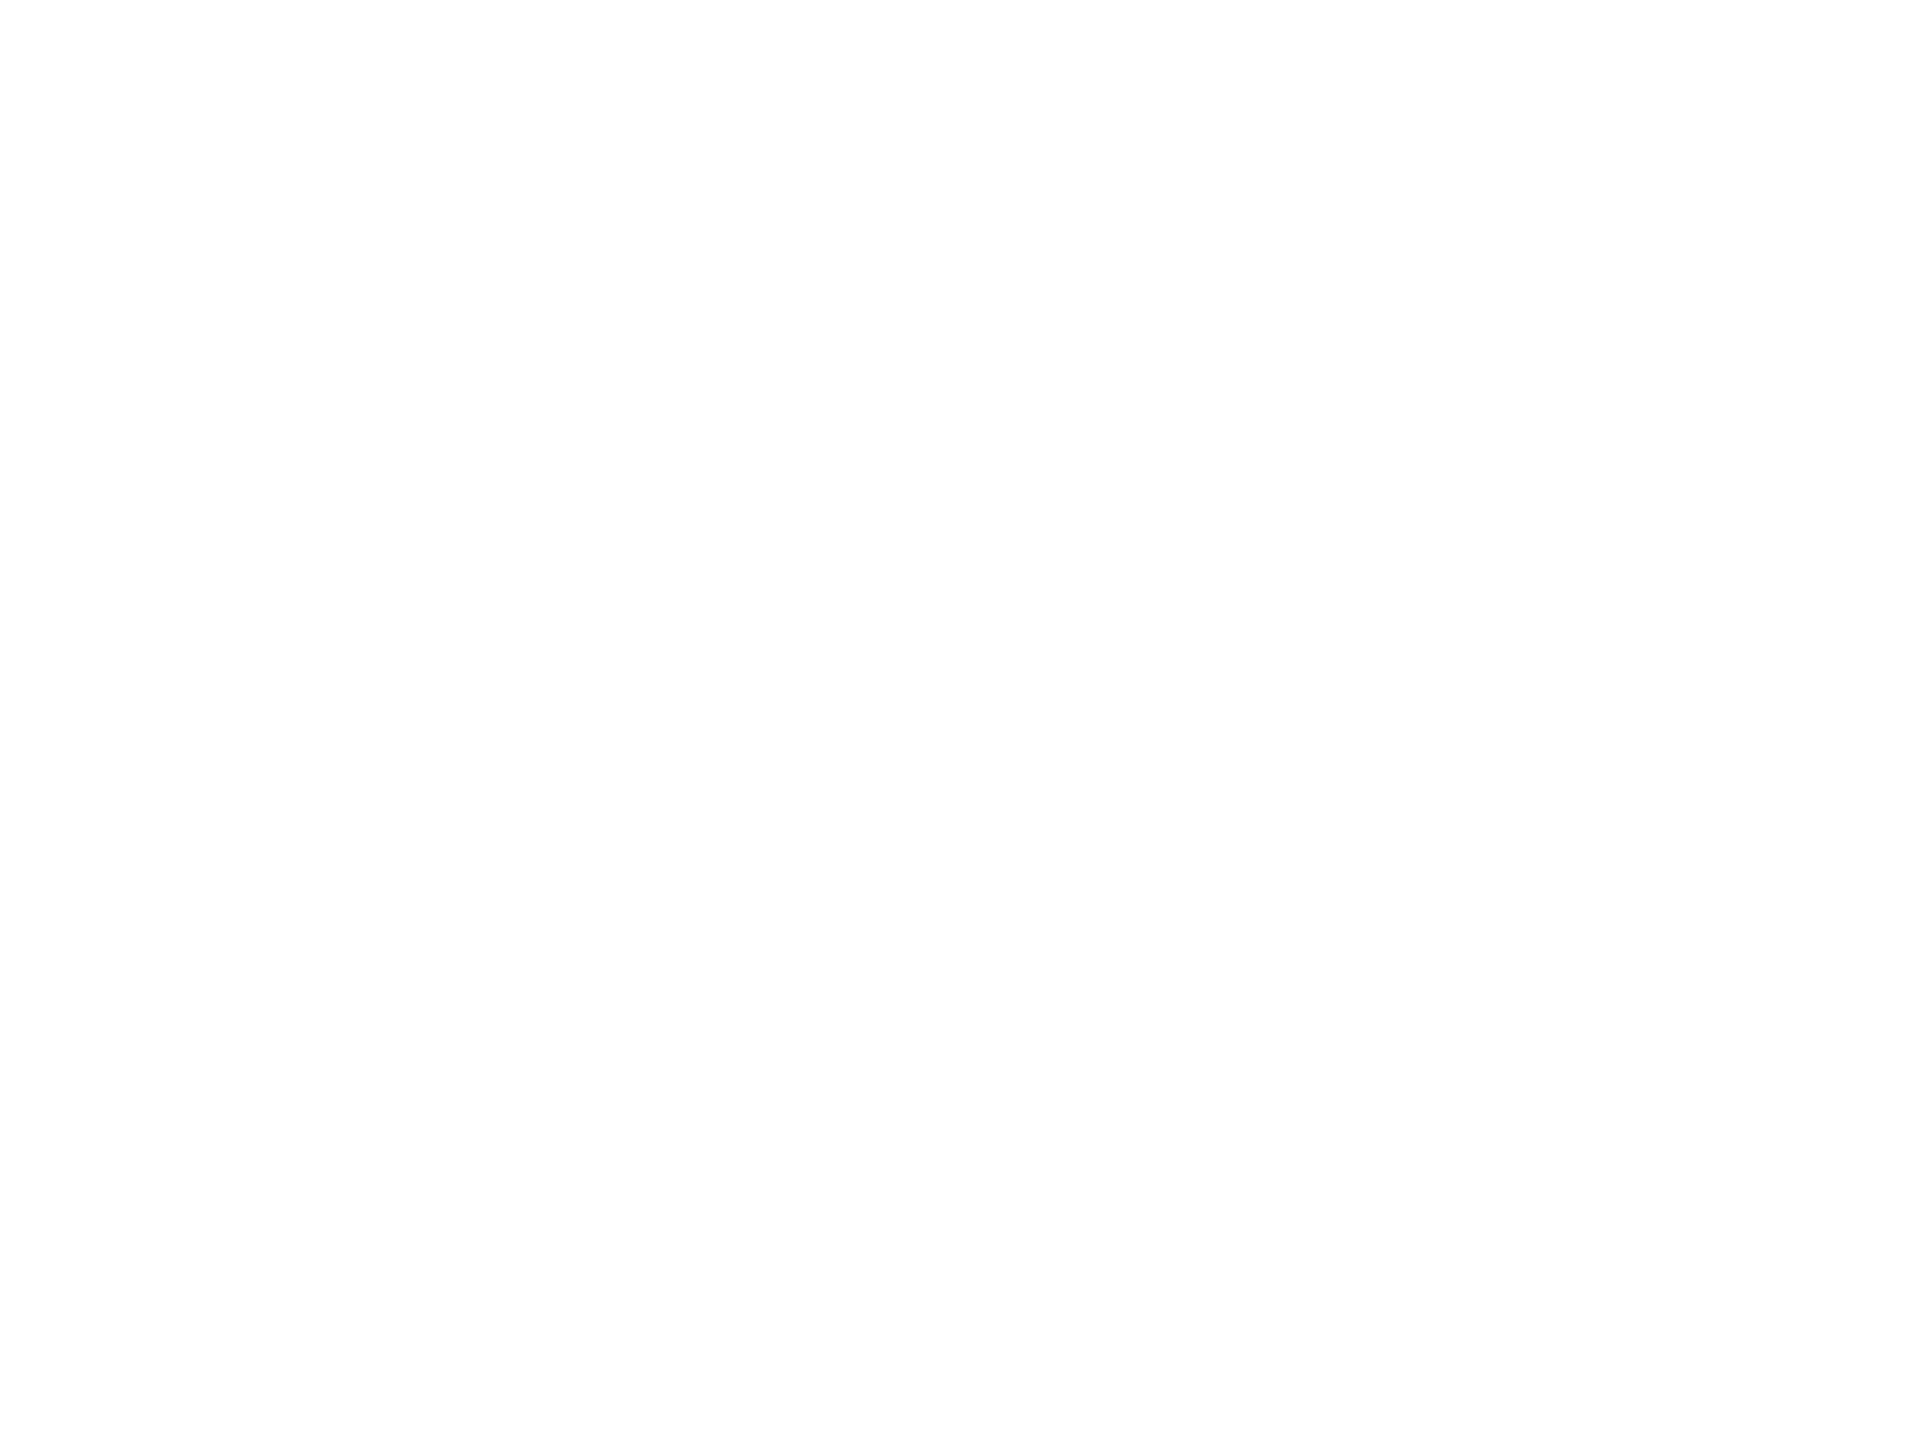 Icarium logo on a laptop screen